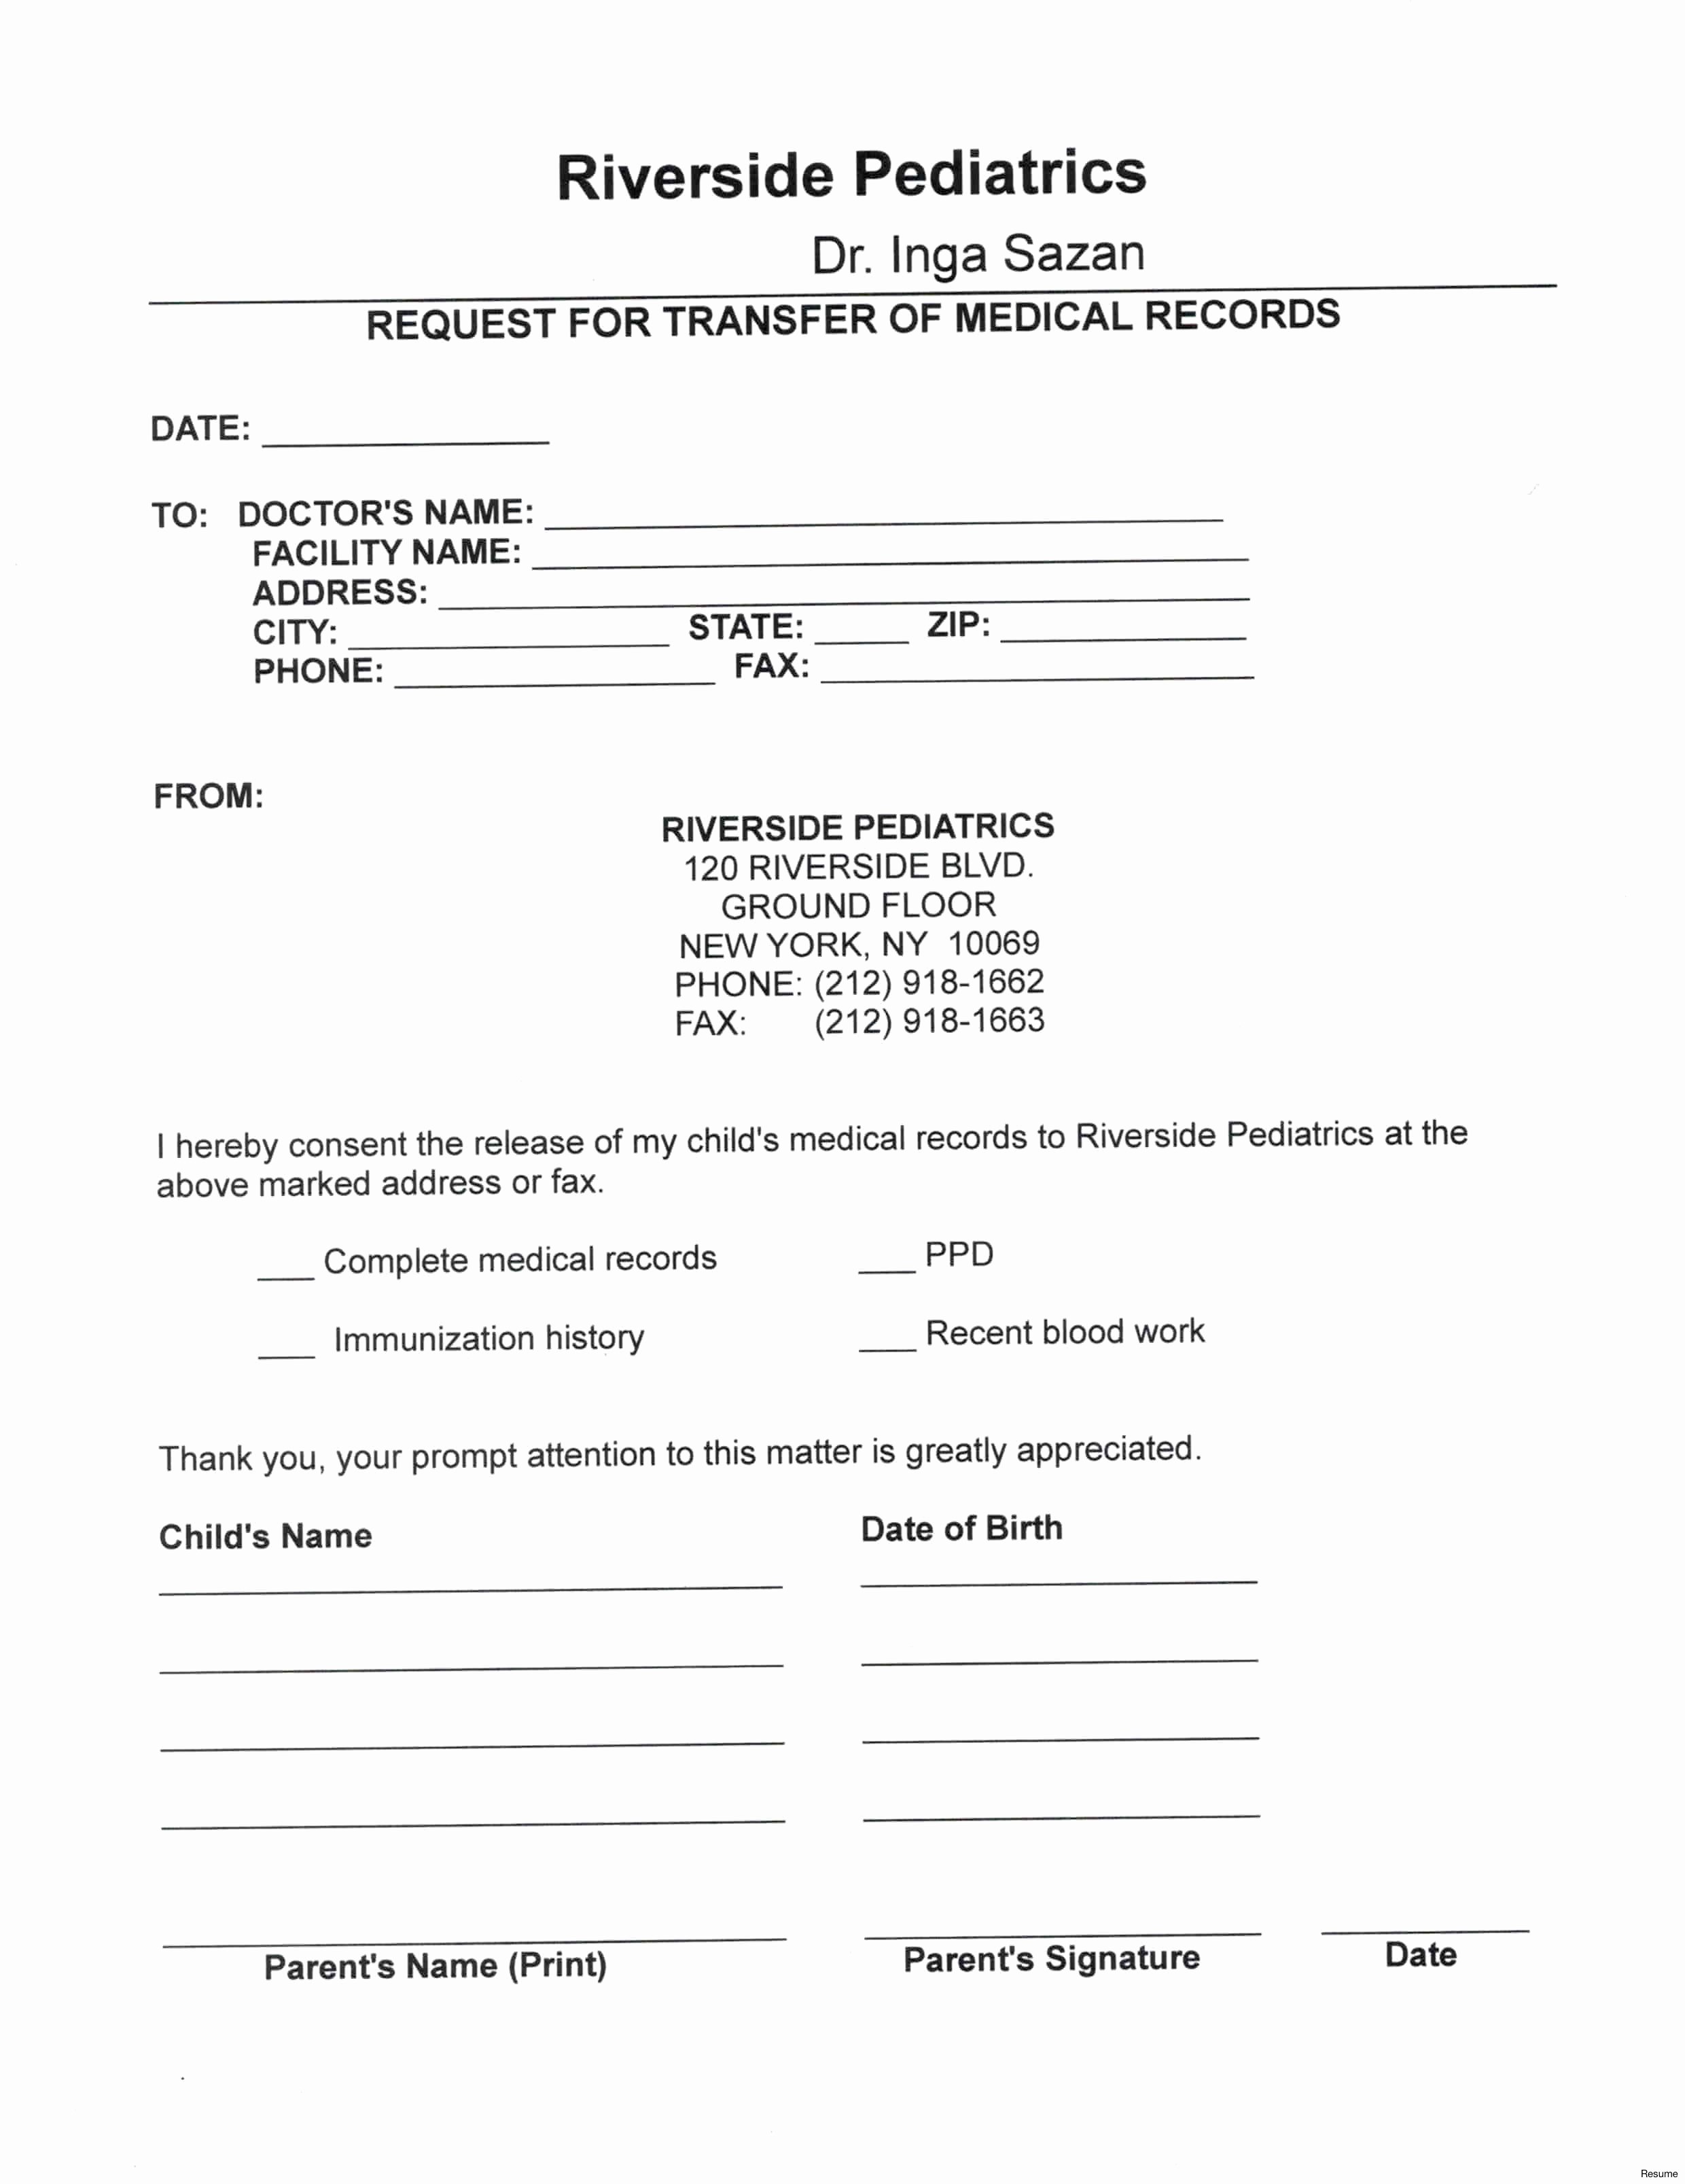 Medical Records forms Template Unique Request for Medical Records Template Letter Samples